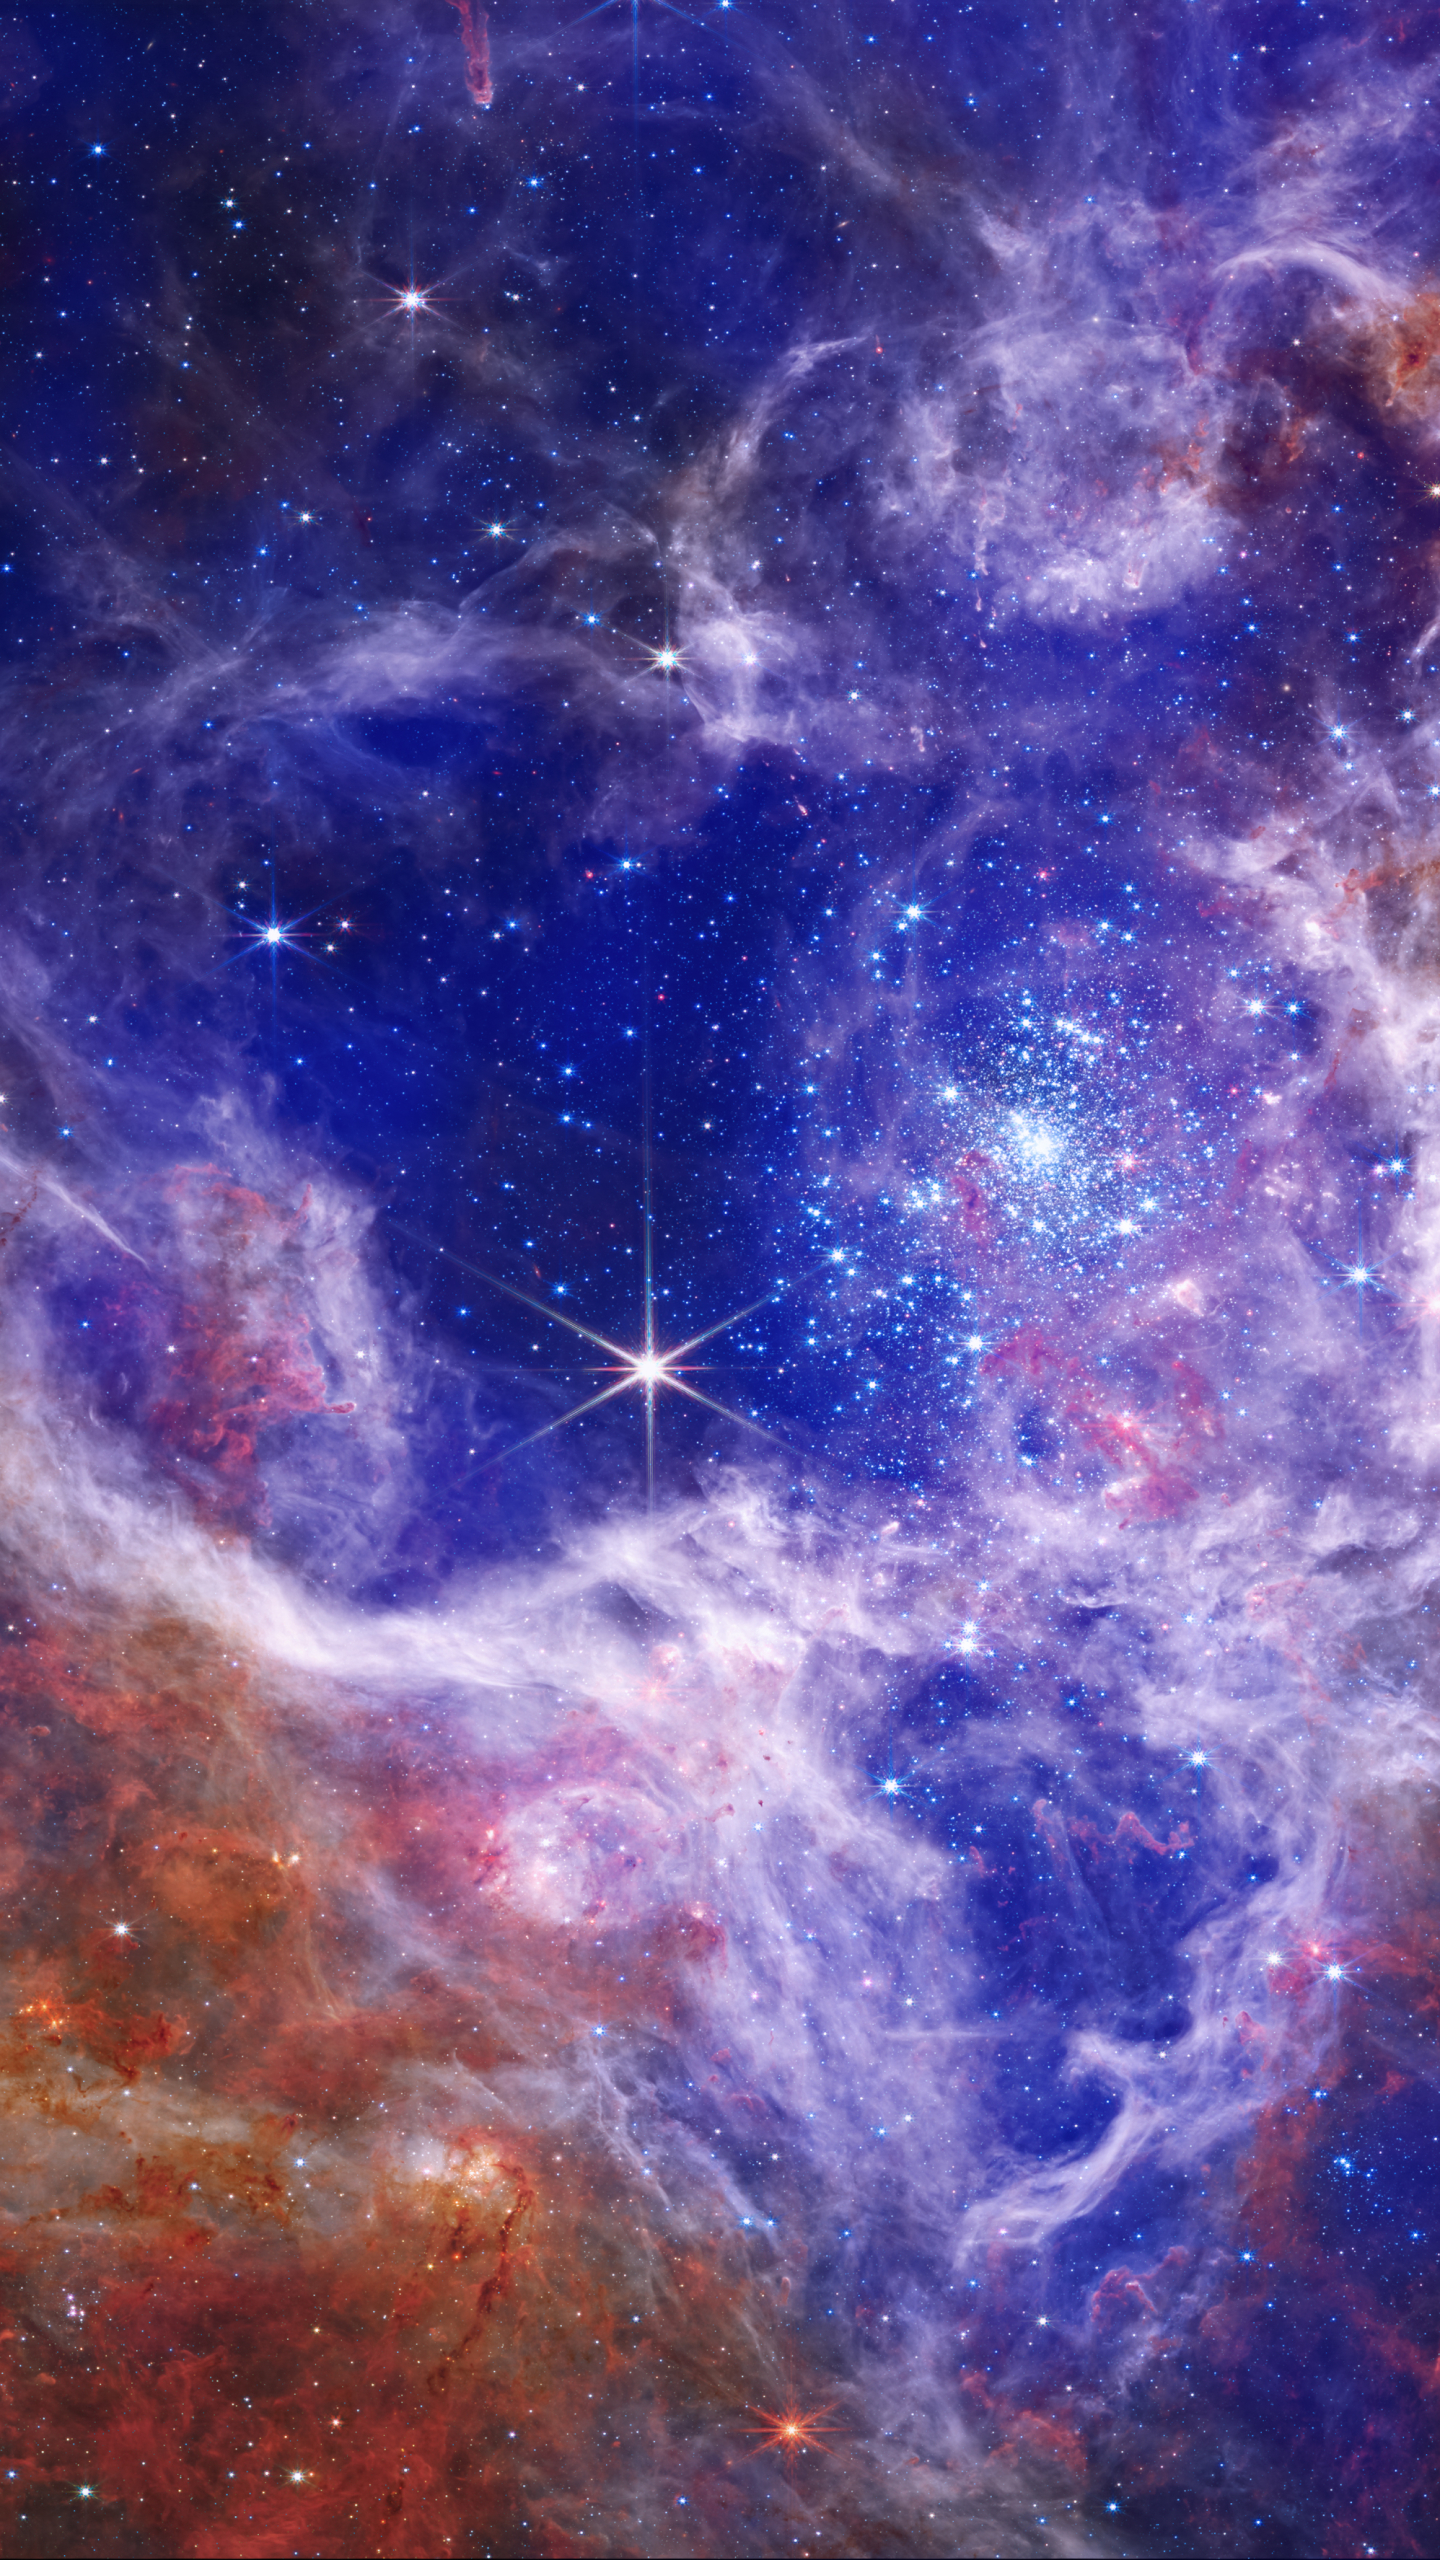 The Tarantula Nebula - 30 Doradus or NGC 2070